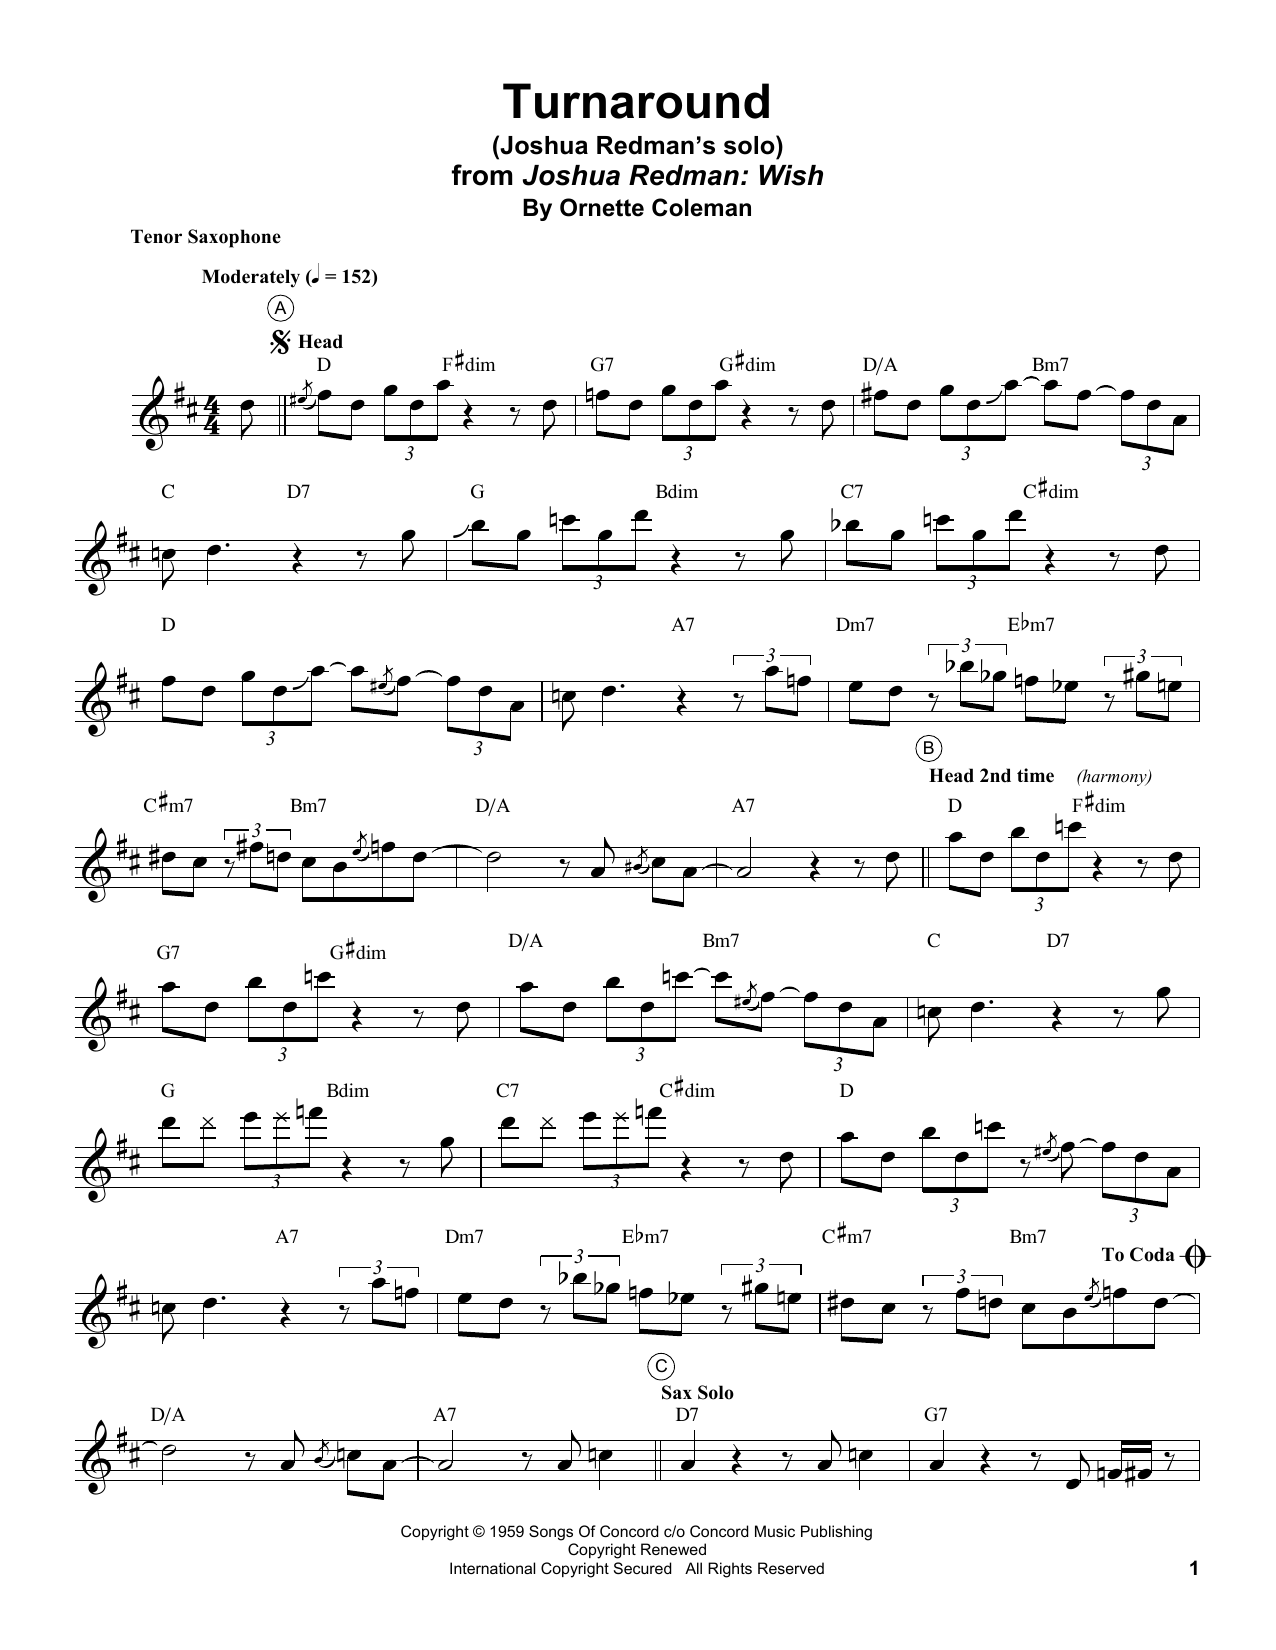 Joshua Redman Turnaround Sheet Music Notes & Chords for Tenor Sax Transcription - Download or Print PDF